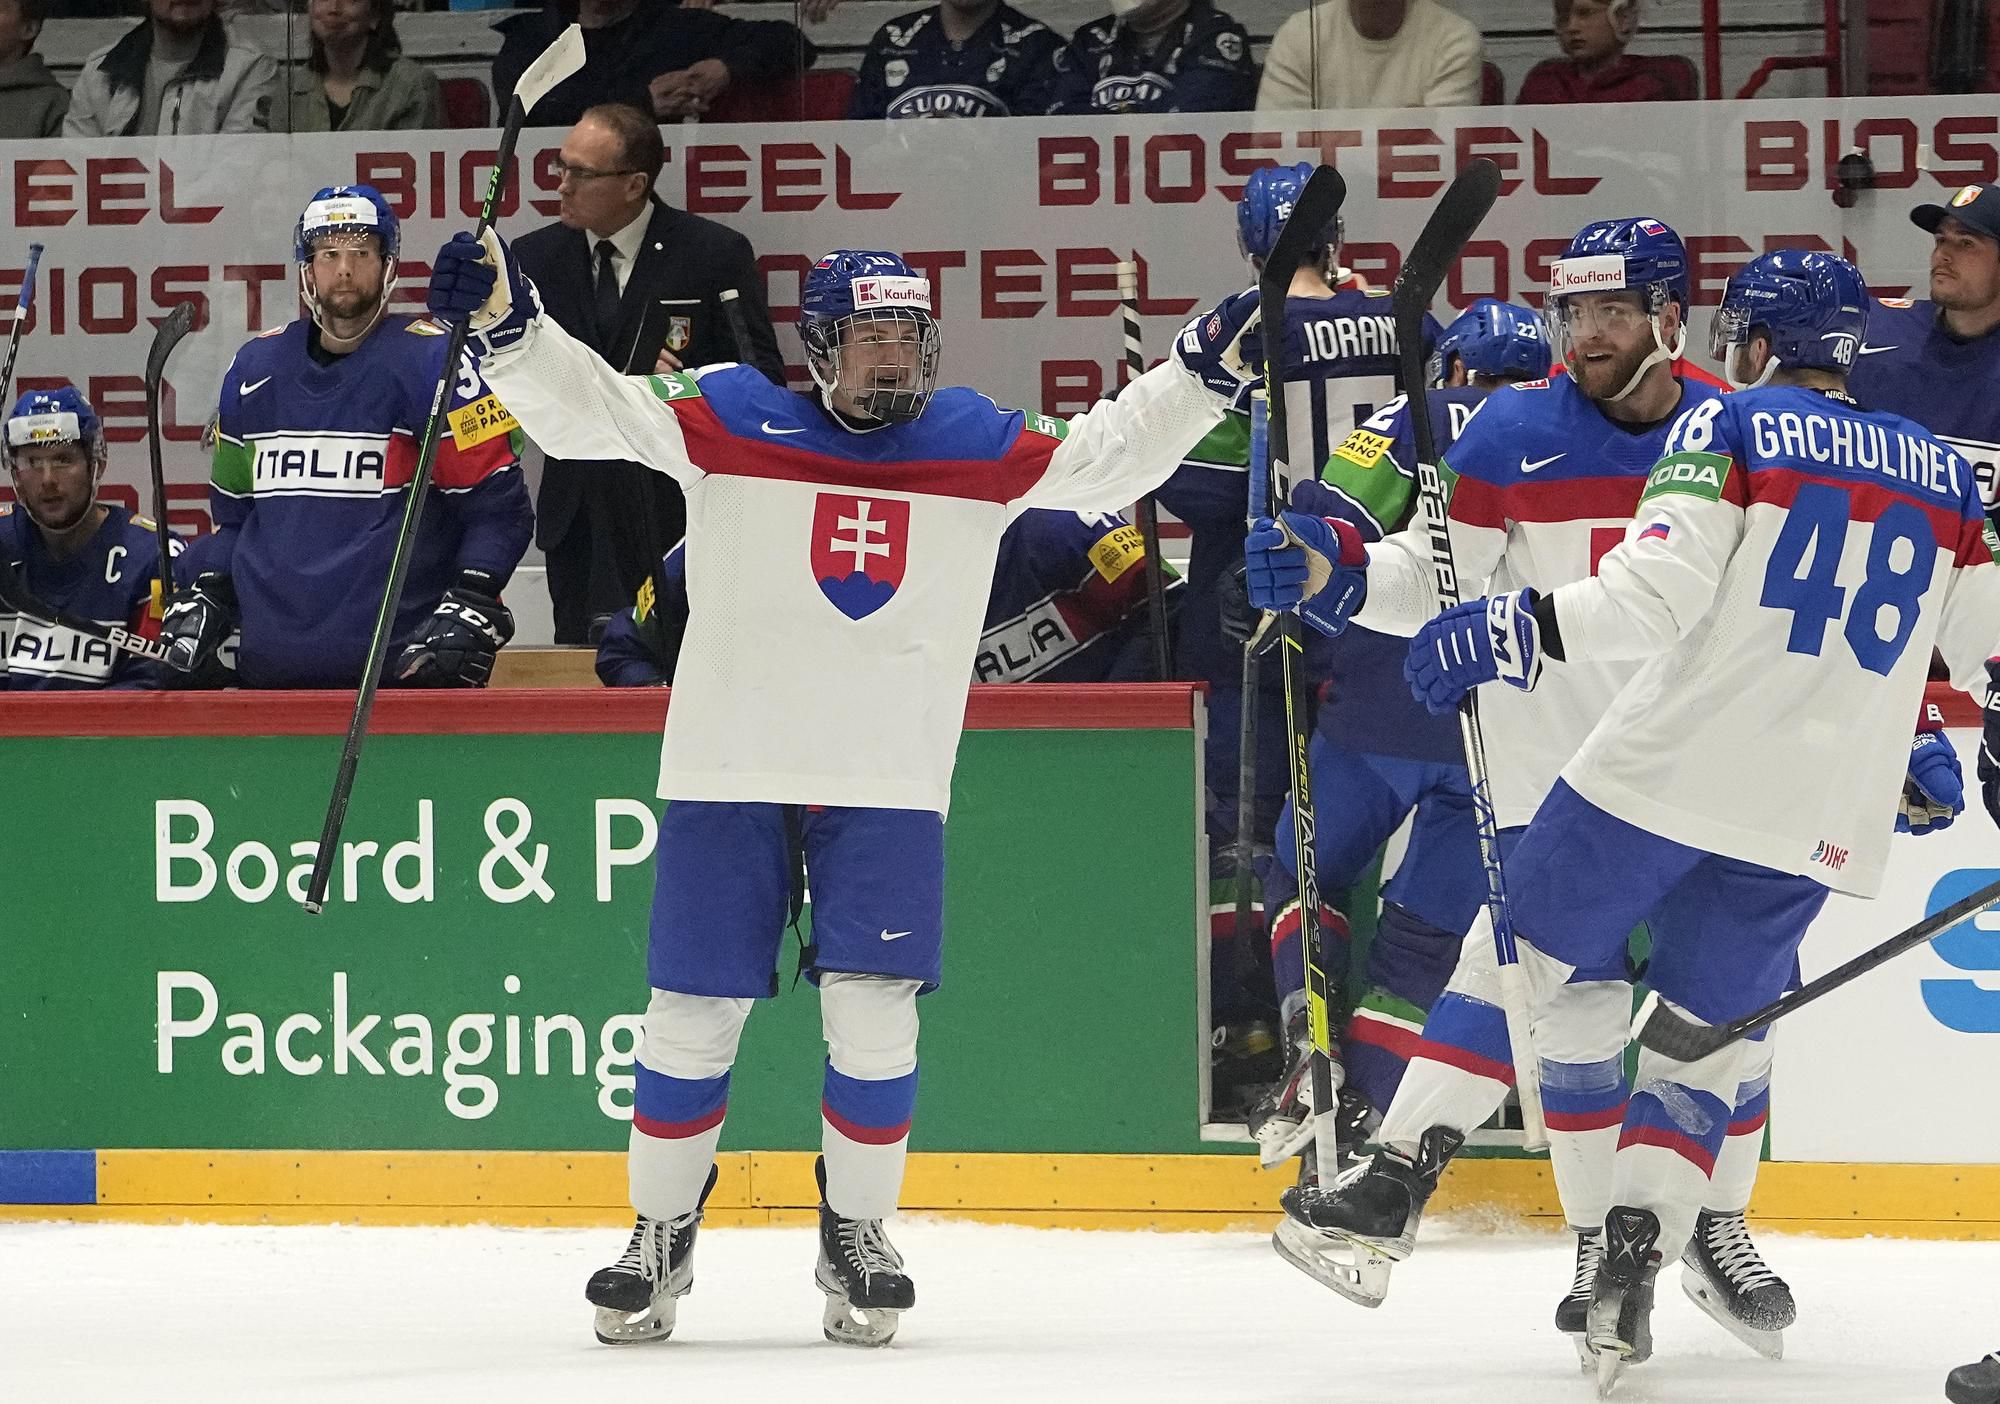 MS v hokeji 2022: Taliansko - Slovensko (Adam Sýkora, Adam Jánošík, Daniel Gachulinec)